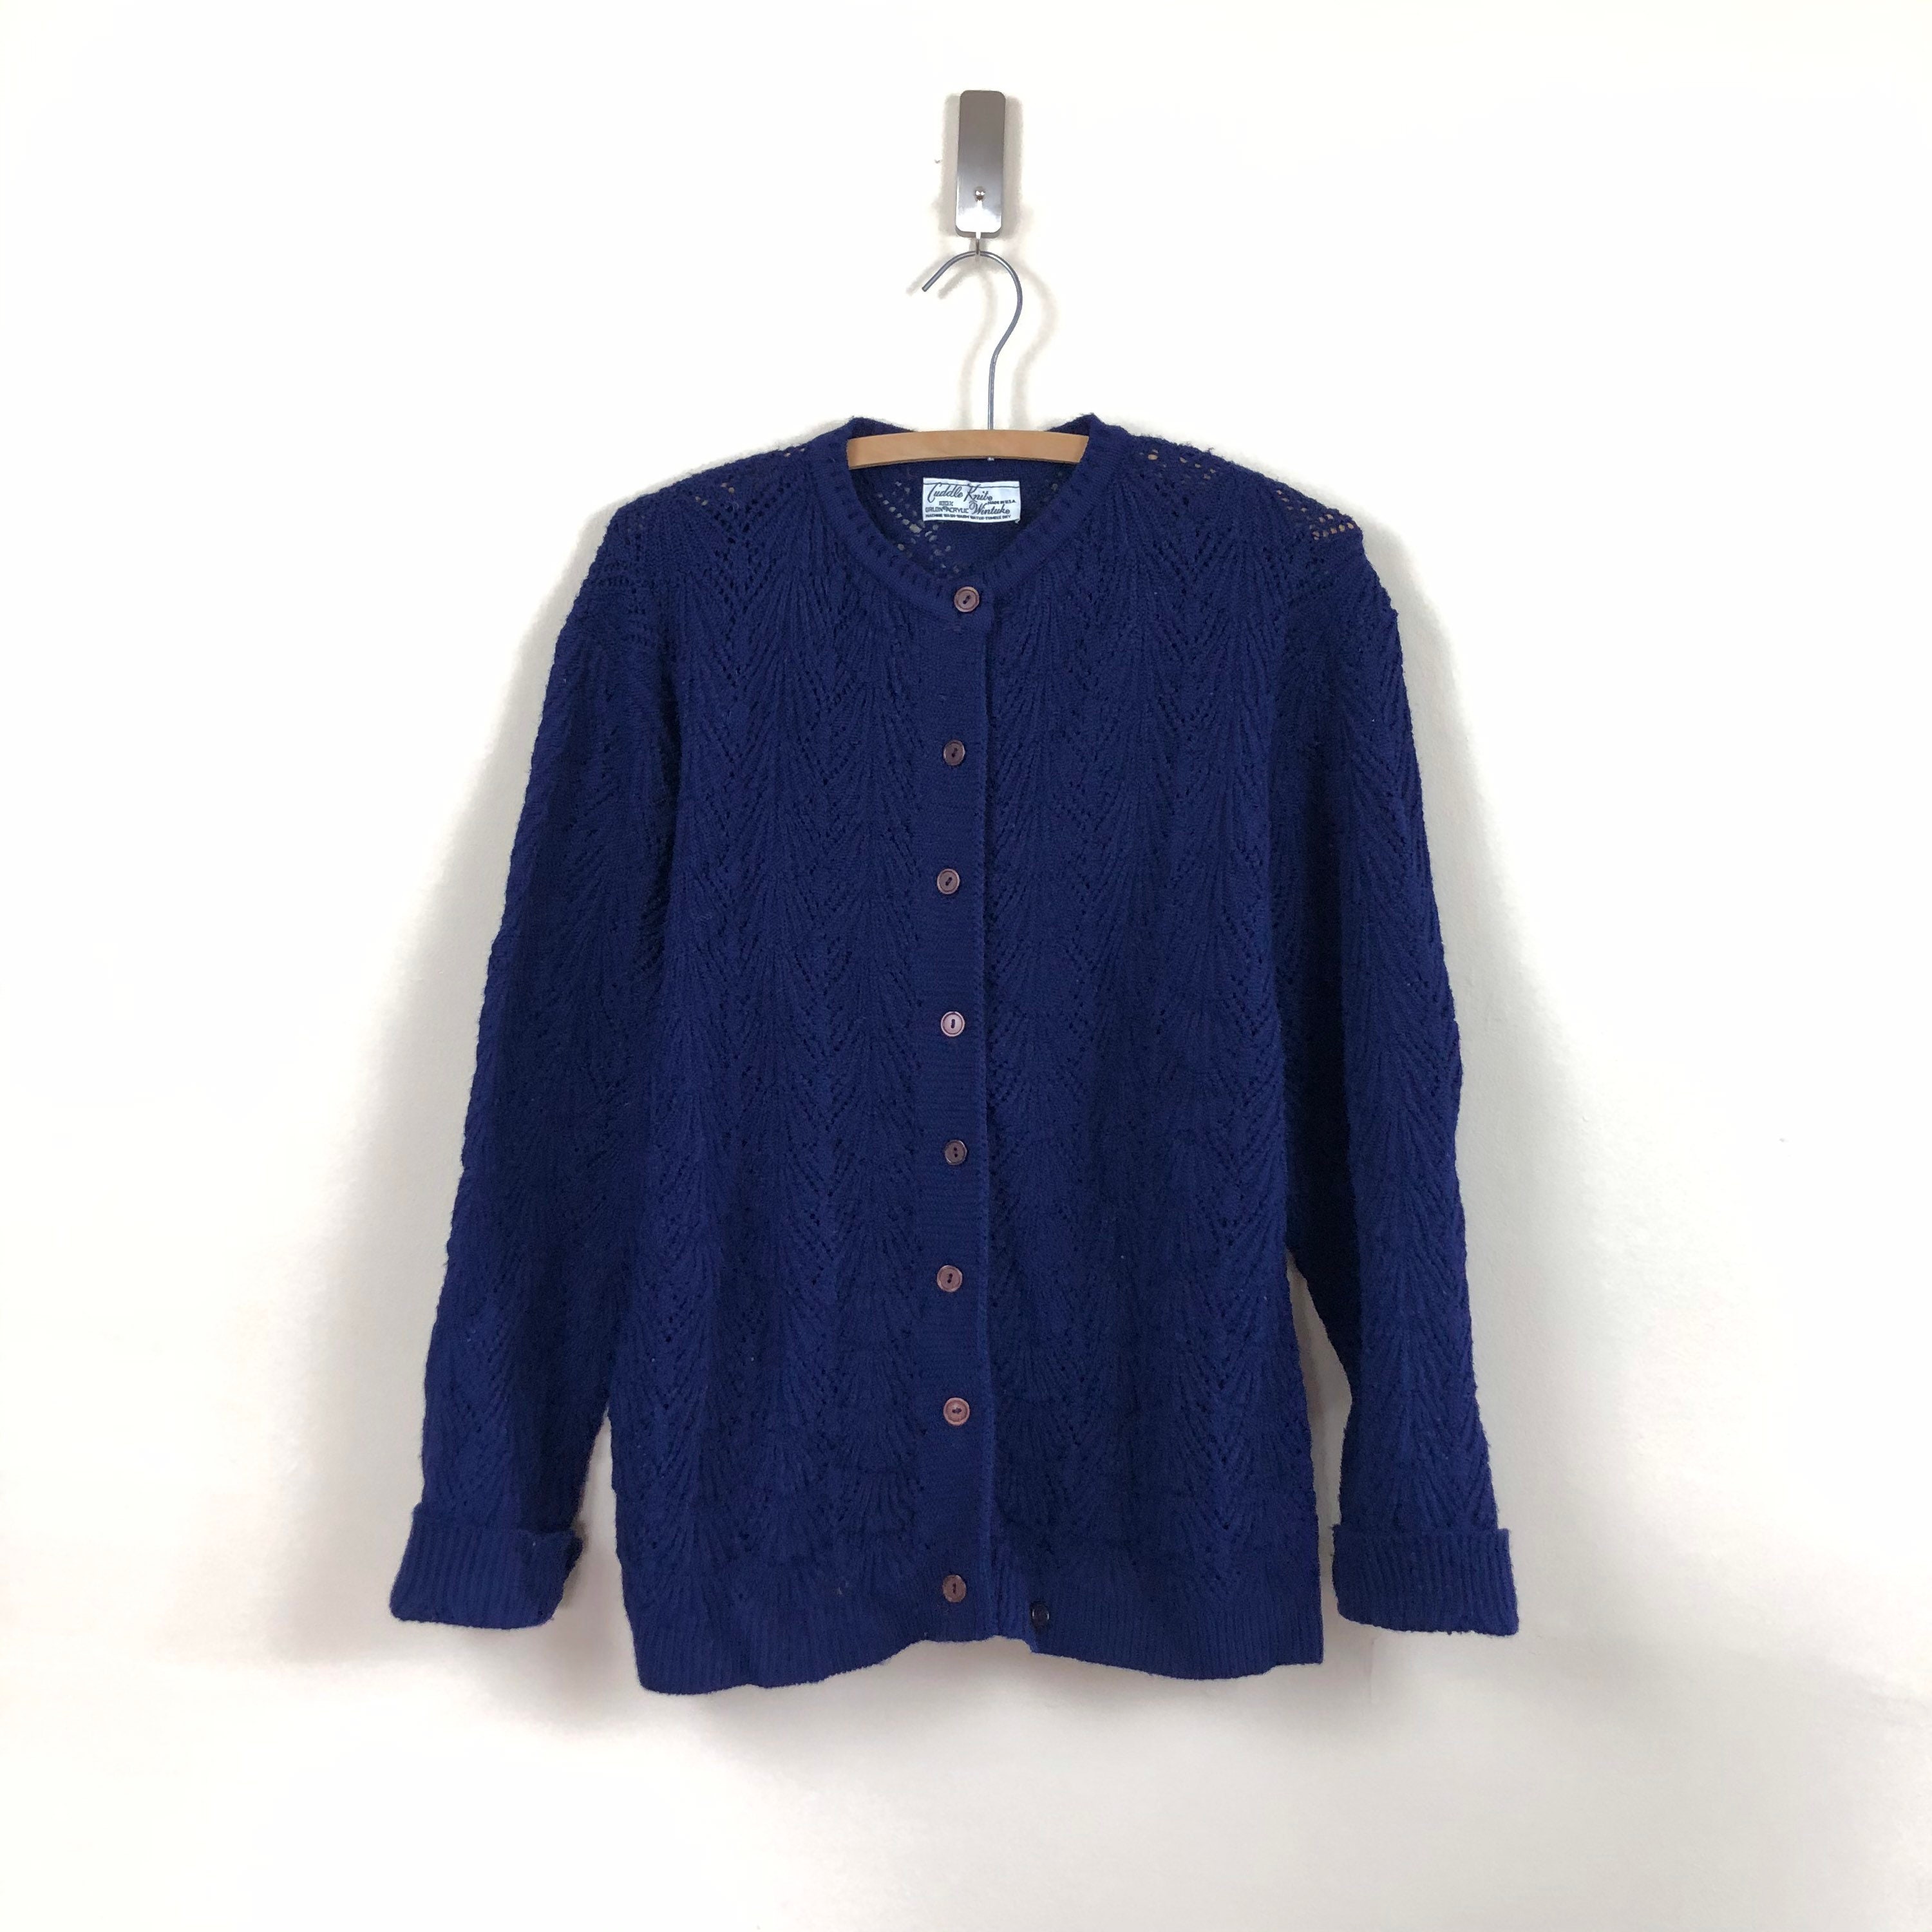 Vintage 60s pointelle knit cardigan navy 1960s sweater mod | Etsy